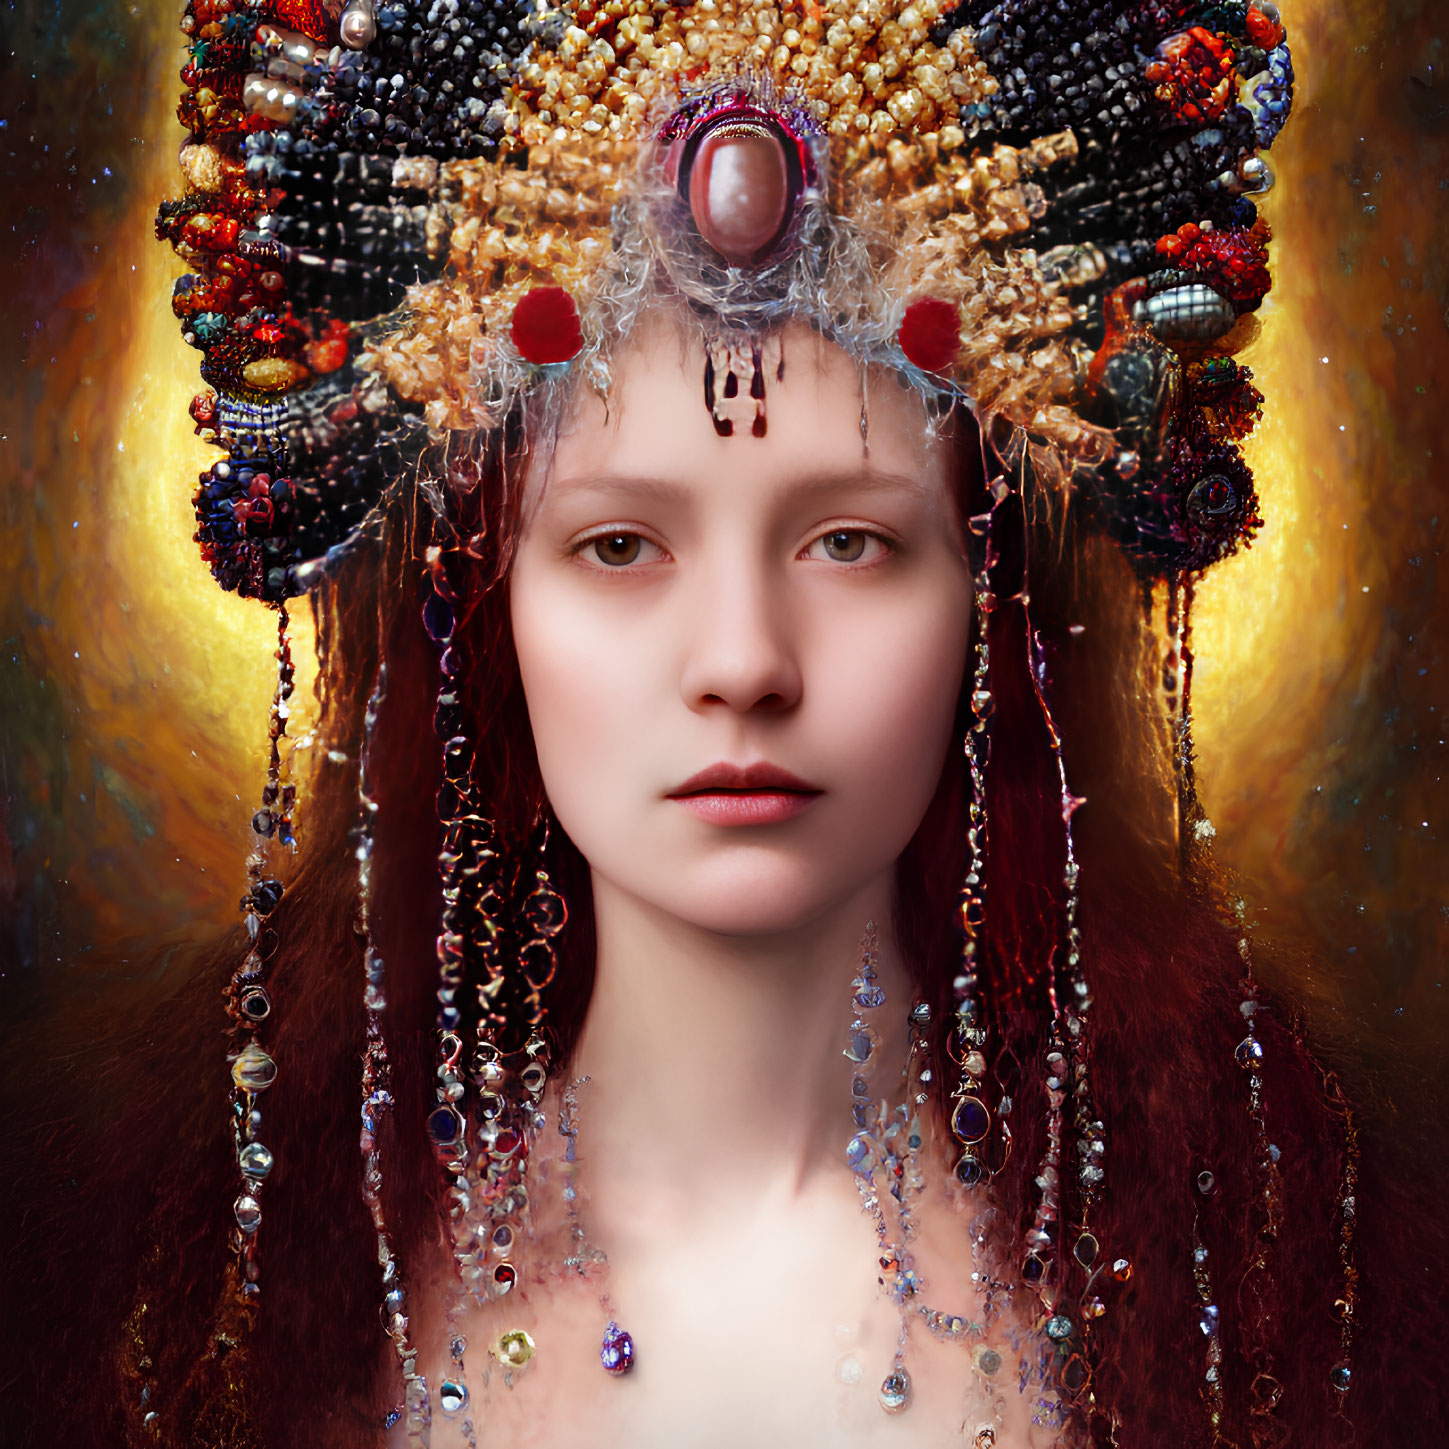 Pale woman in ornate headpiece against warm backdrop